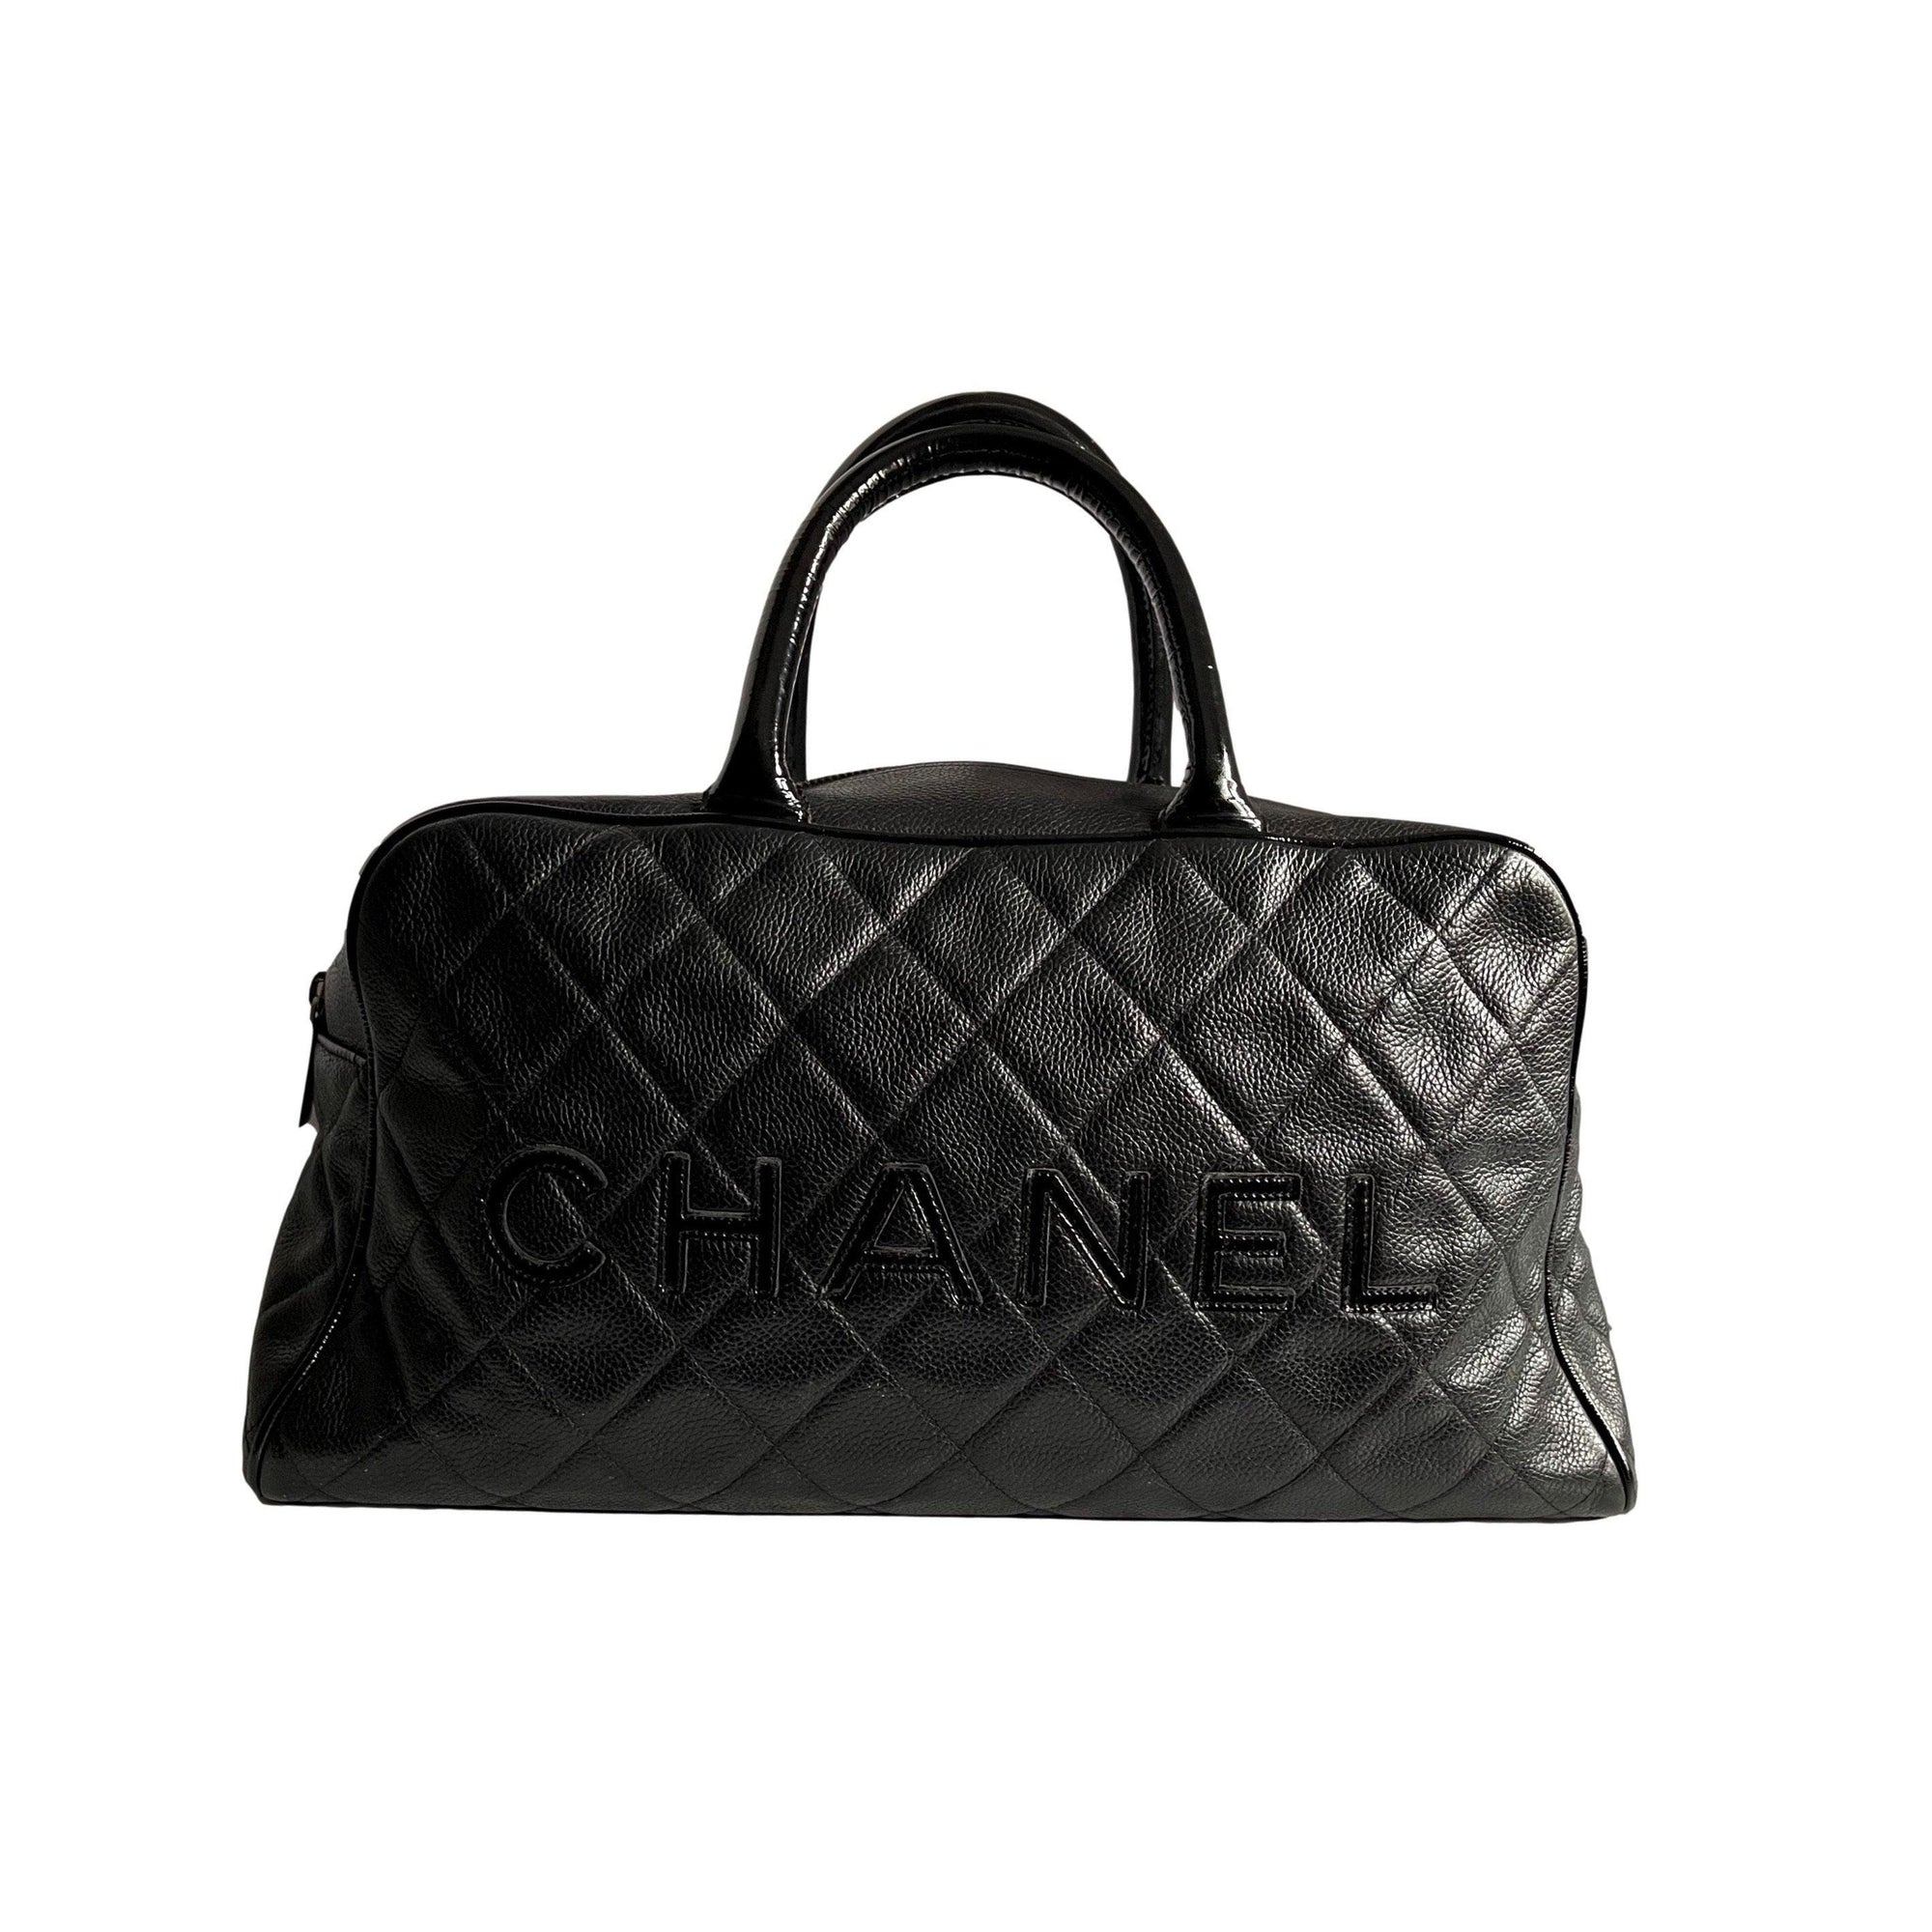 Chanel Black Caviar Leather Boston Bag - Handbags